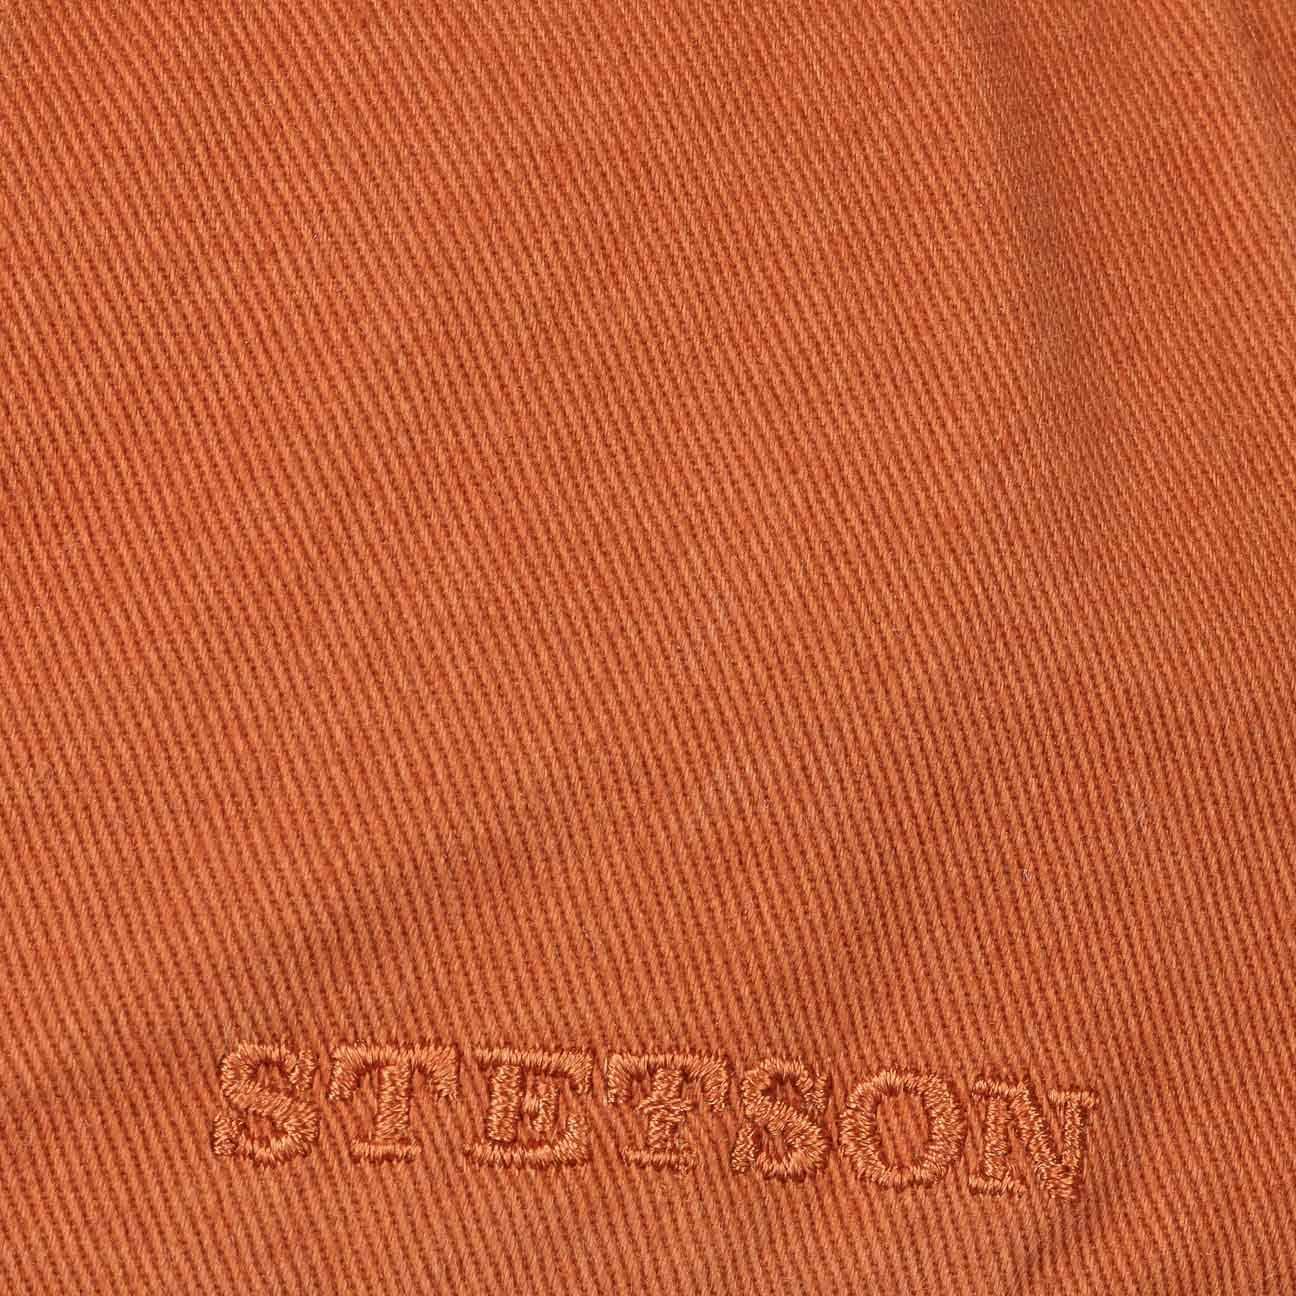 Cappellino da baseball arancione Stetson - MONSIEUR